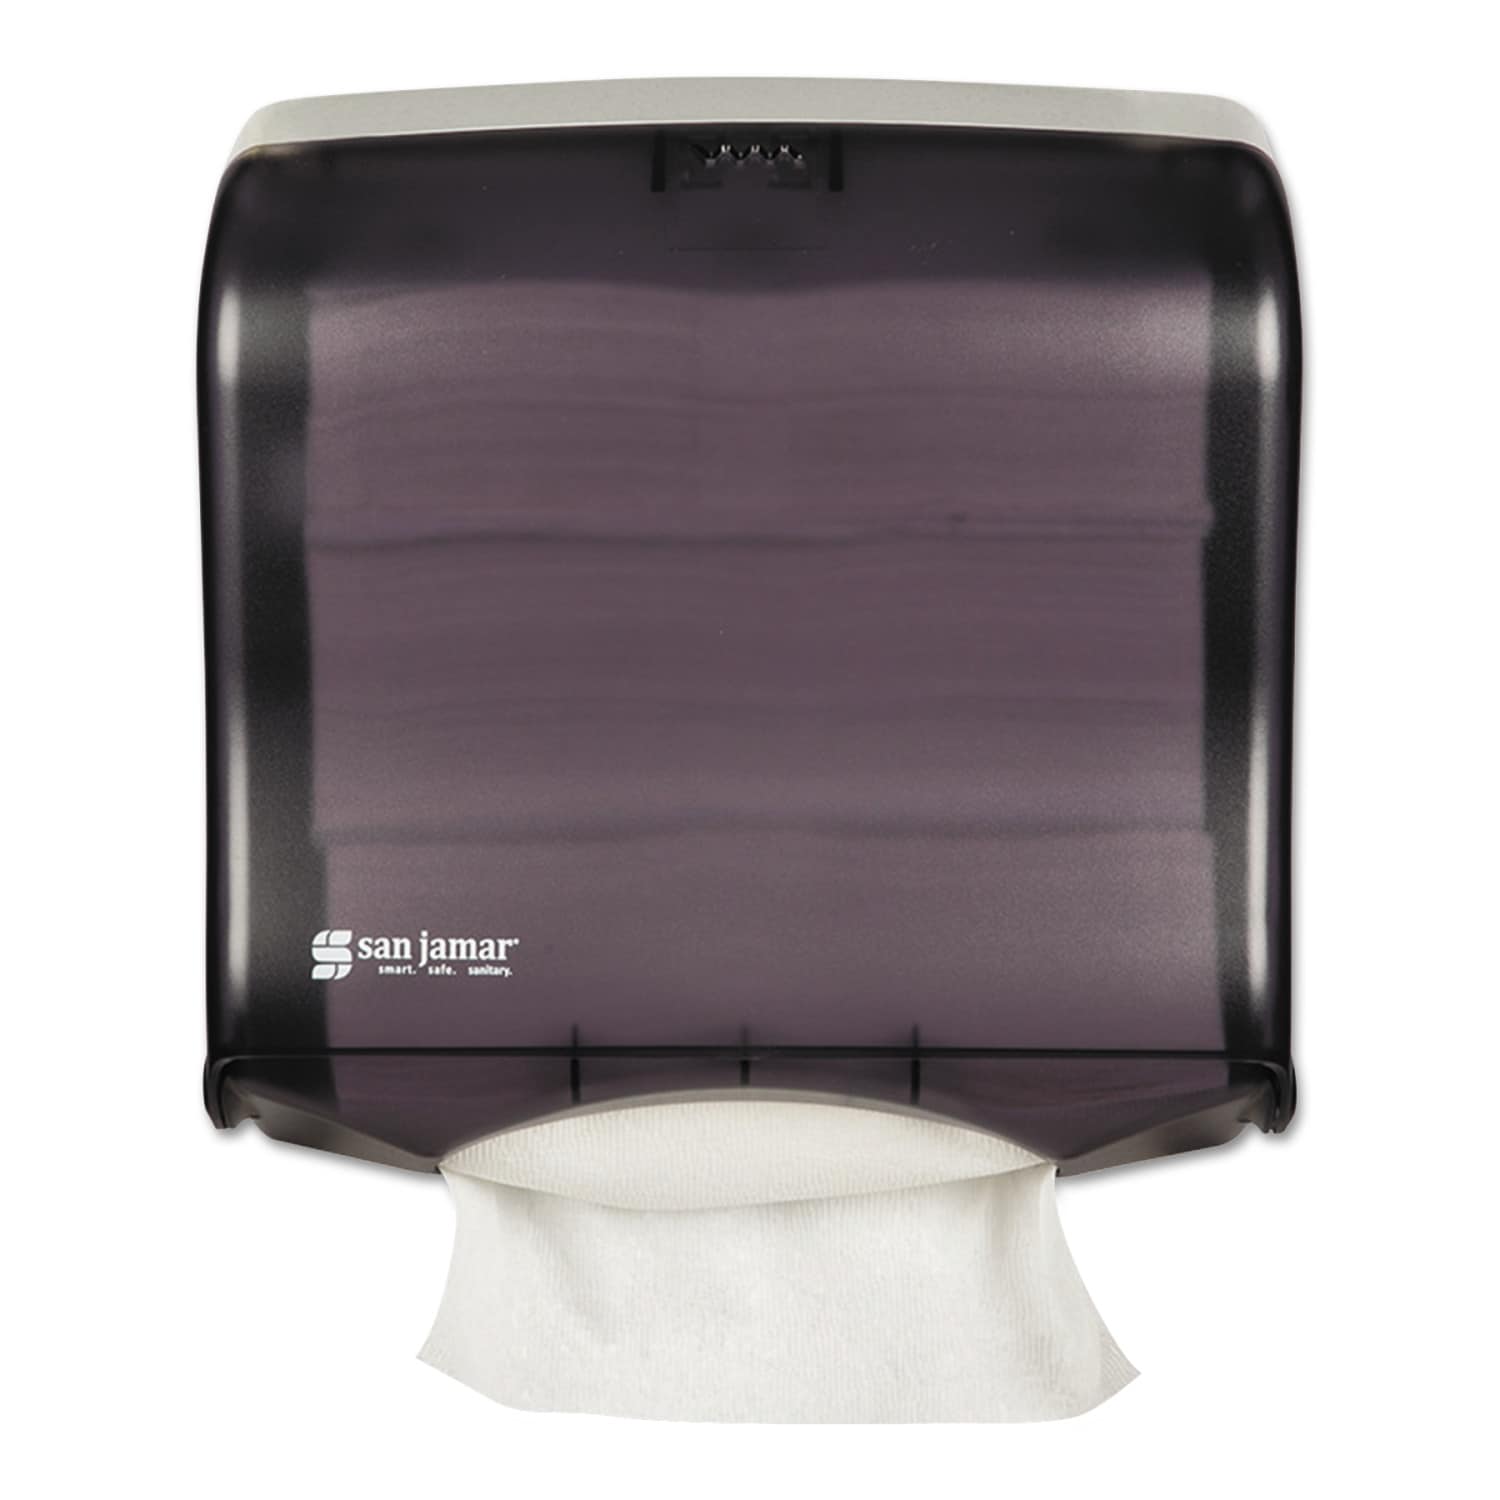 San Jamar Ultrafold Fusion C-Fold & Multifold Towel Dispenser 11 1/2x5 1/2x11 1 